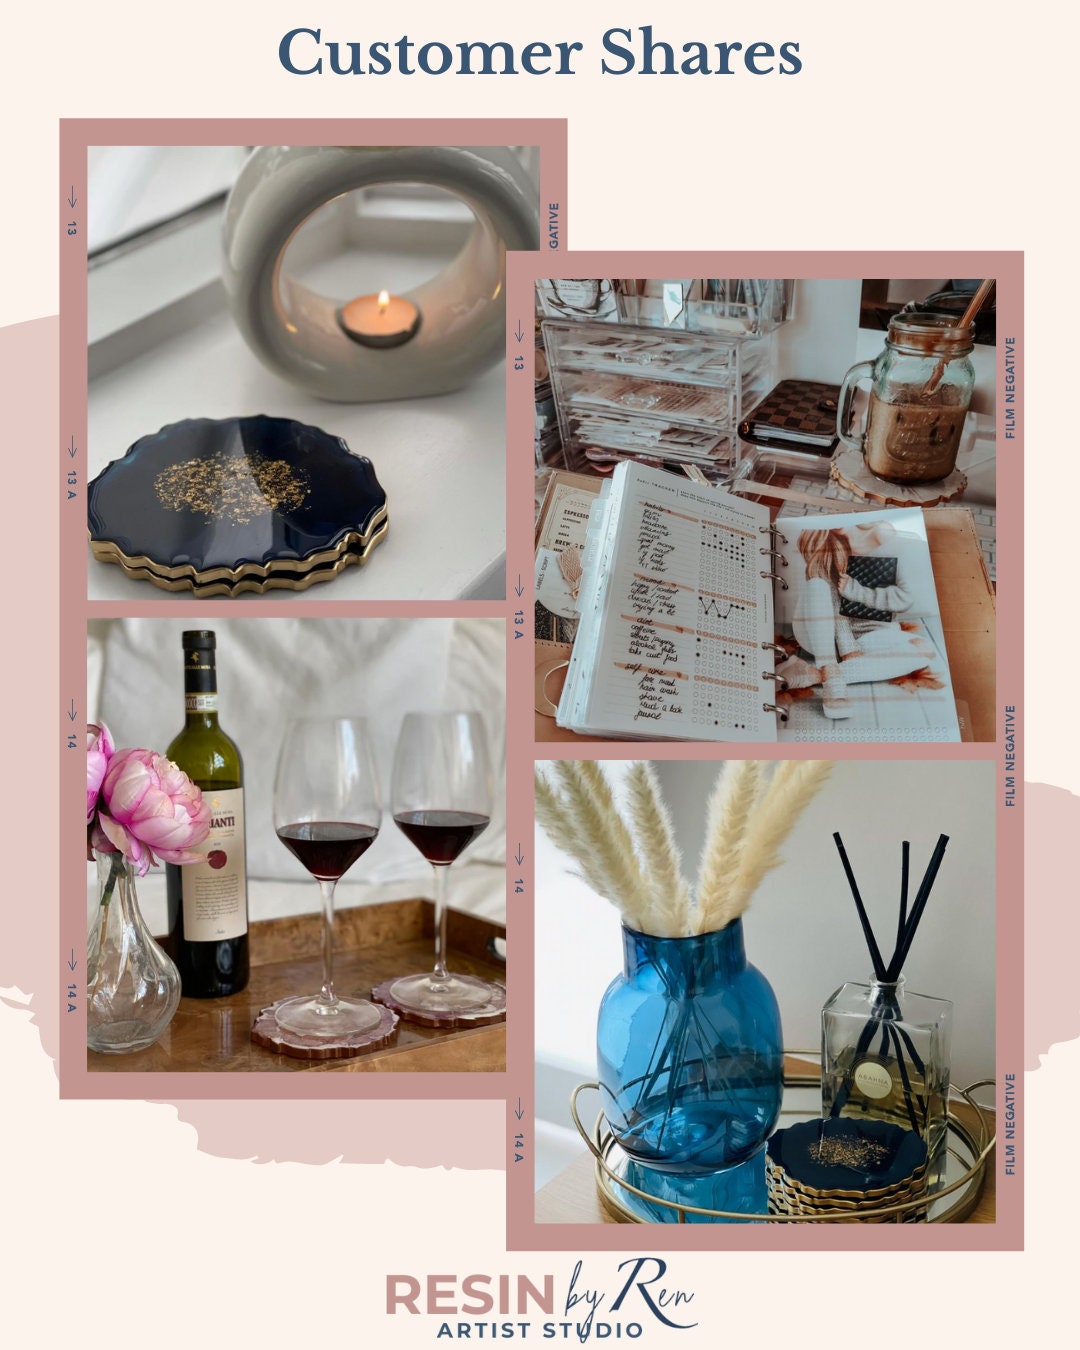 Baby Pink & Gold Coaster Set 2 / Handmade Resin Agate Slice / Gold Stones / Gift Idea for Bedroom Decor